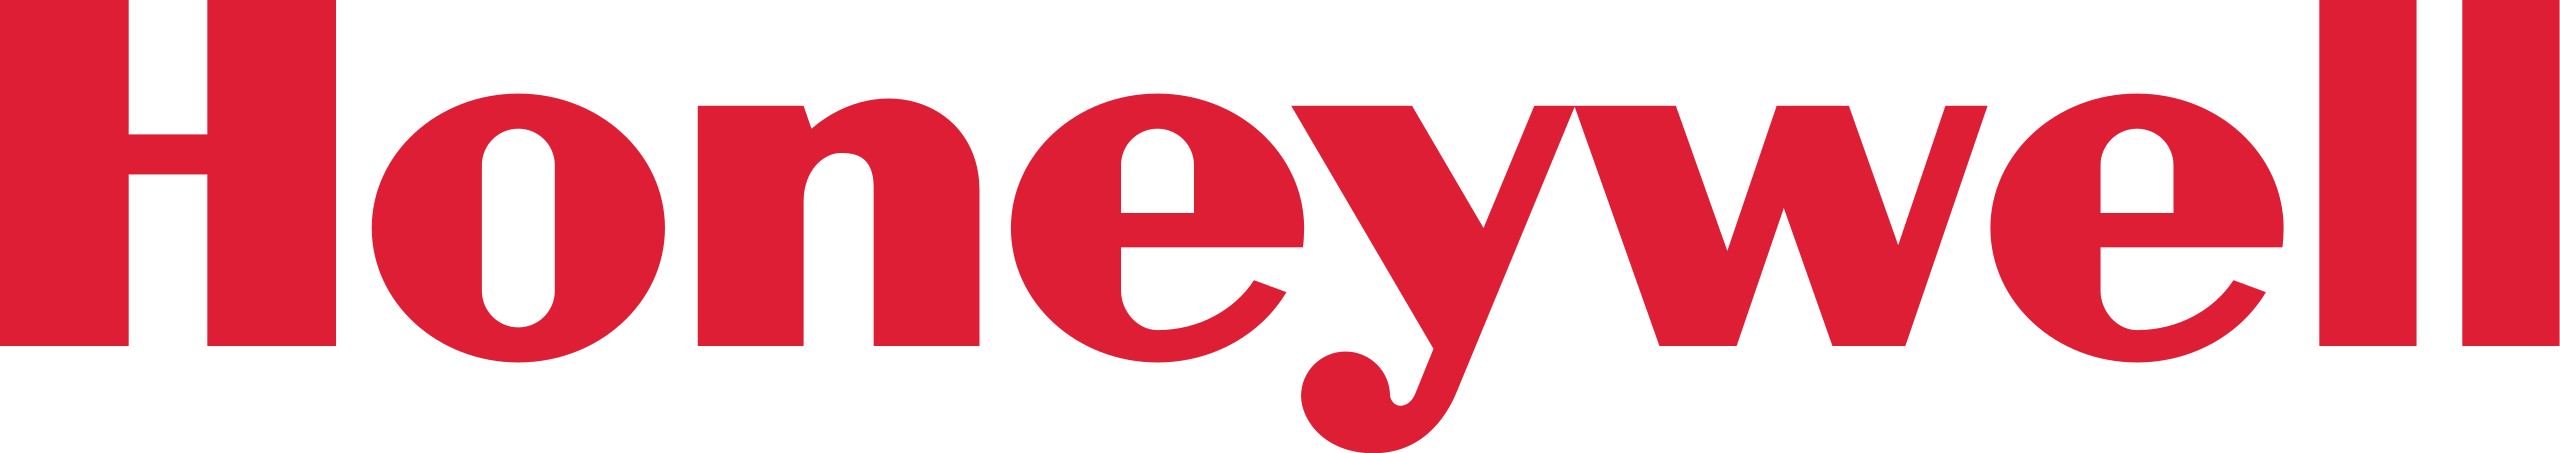 Honeywell_logo.svg